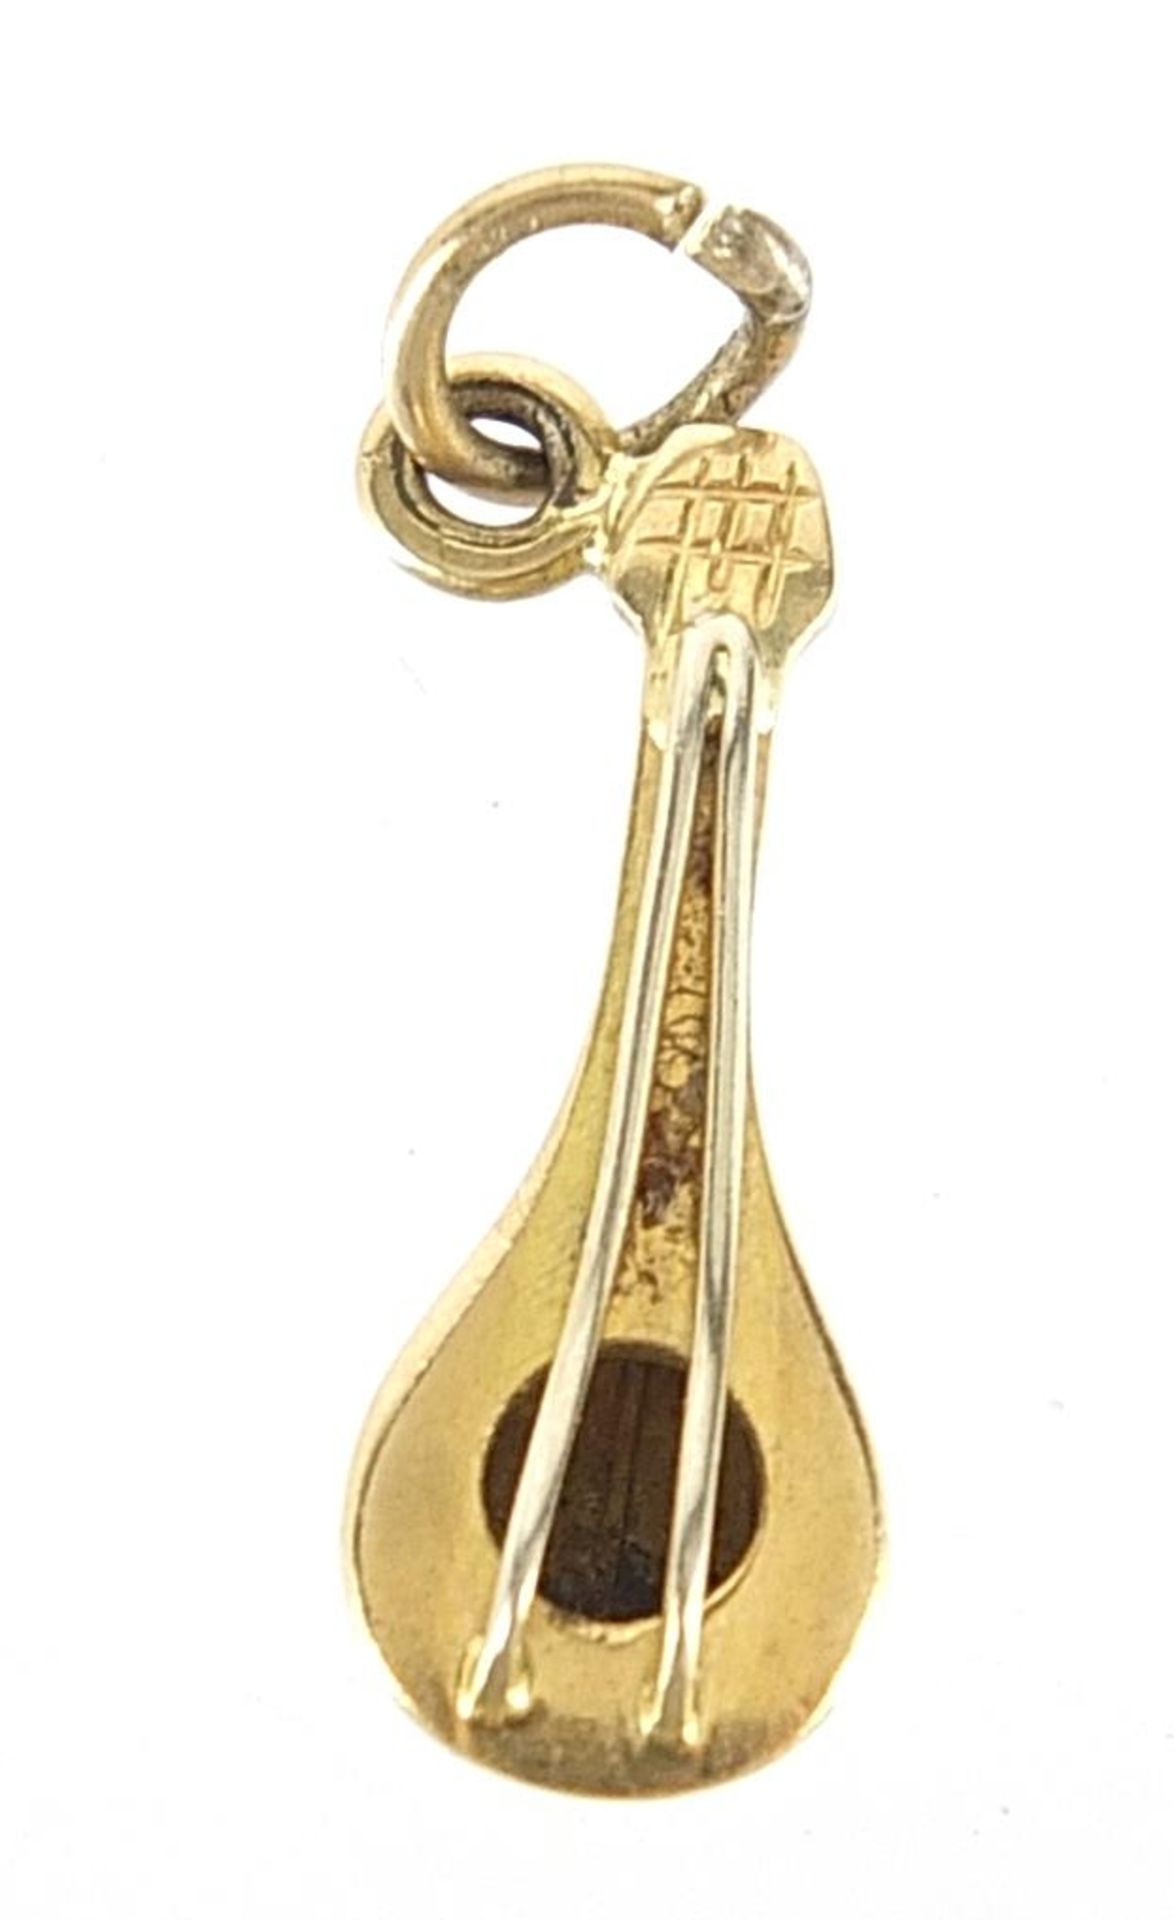 9ct gold mandolin charm, 1.5cm in length, 1.0g